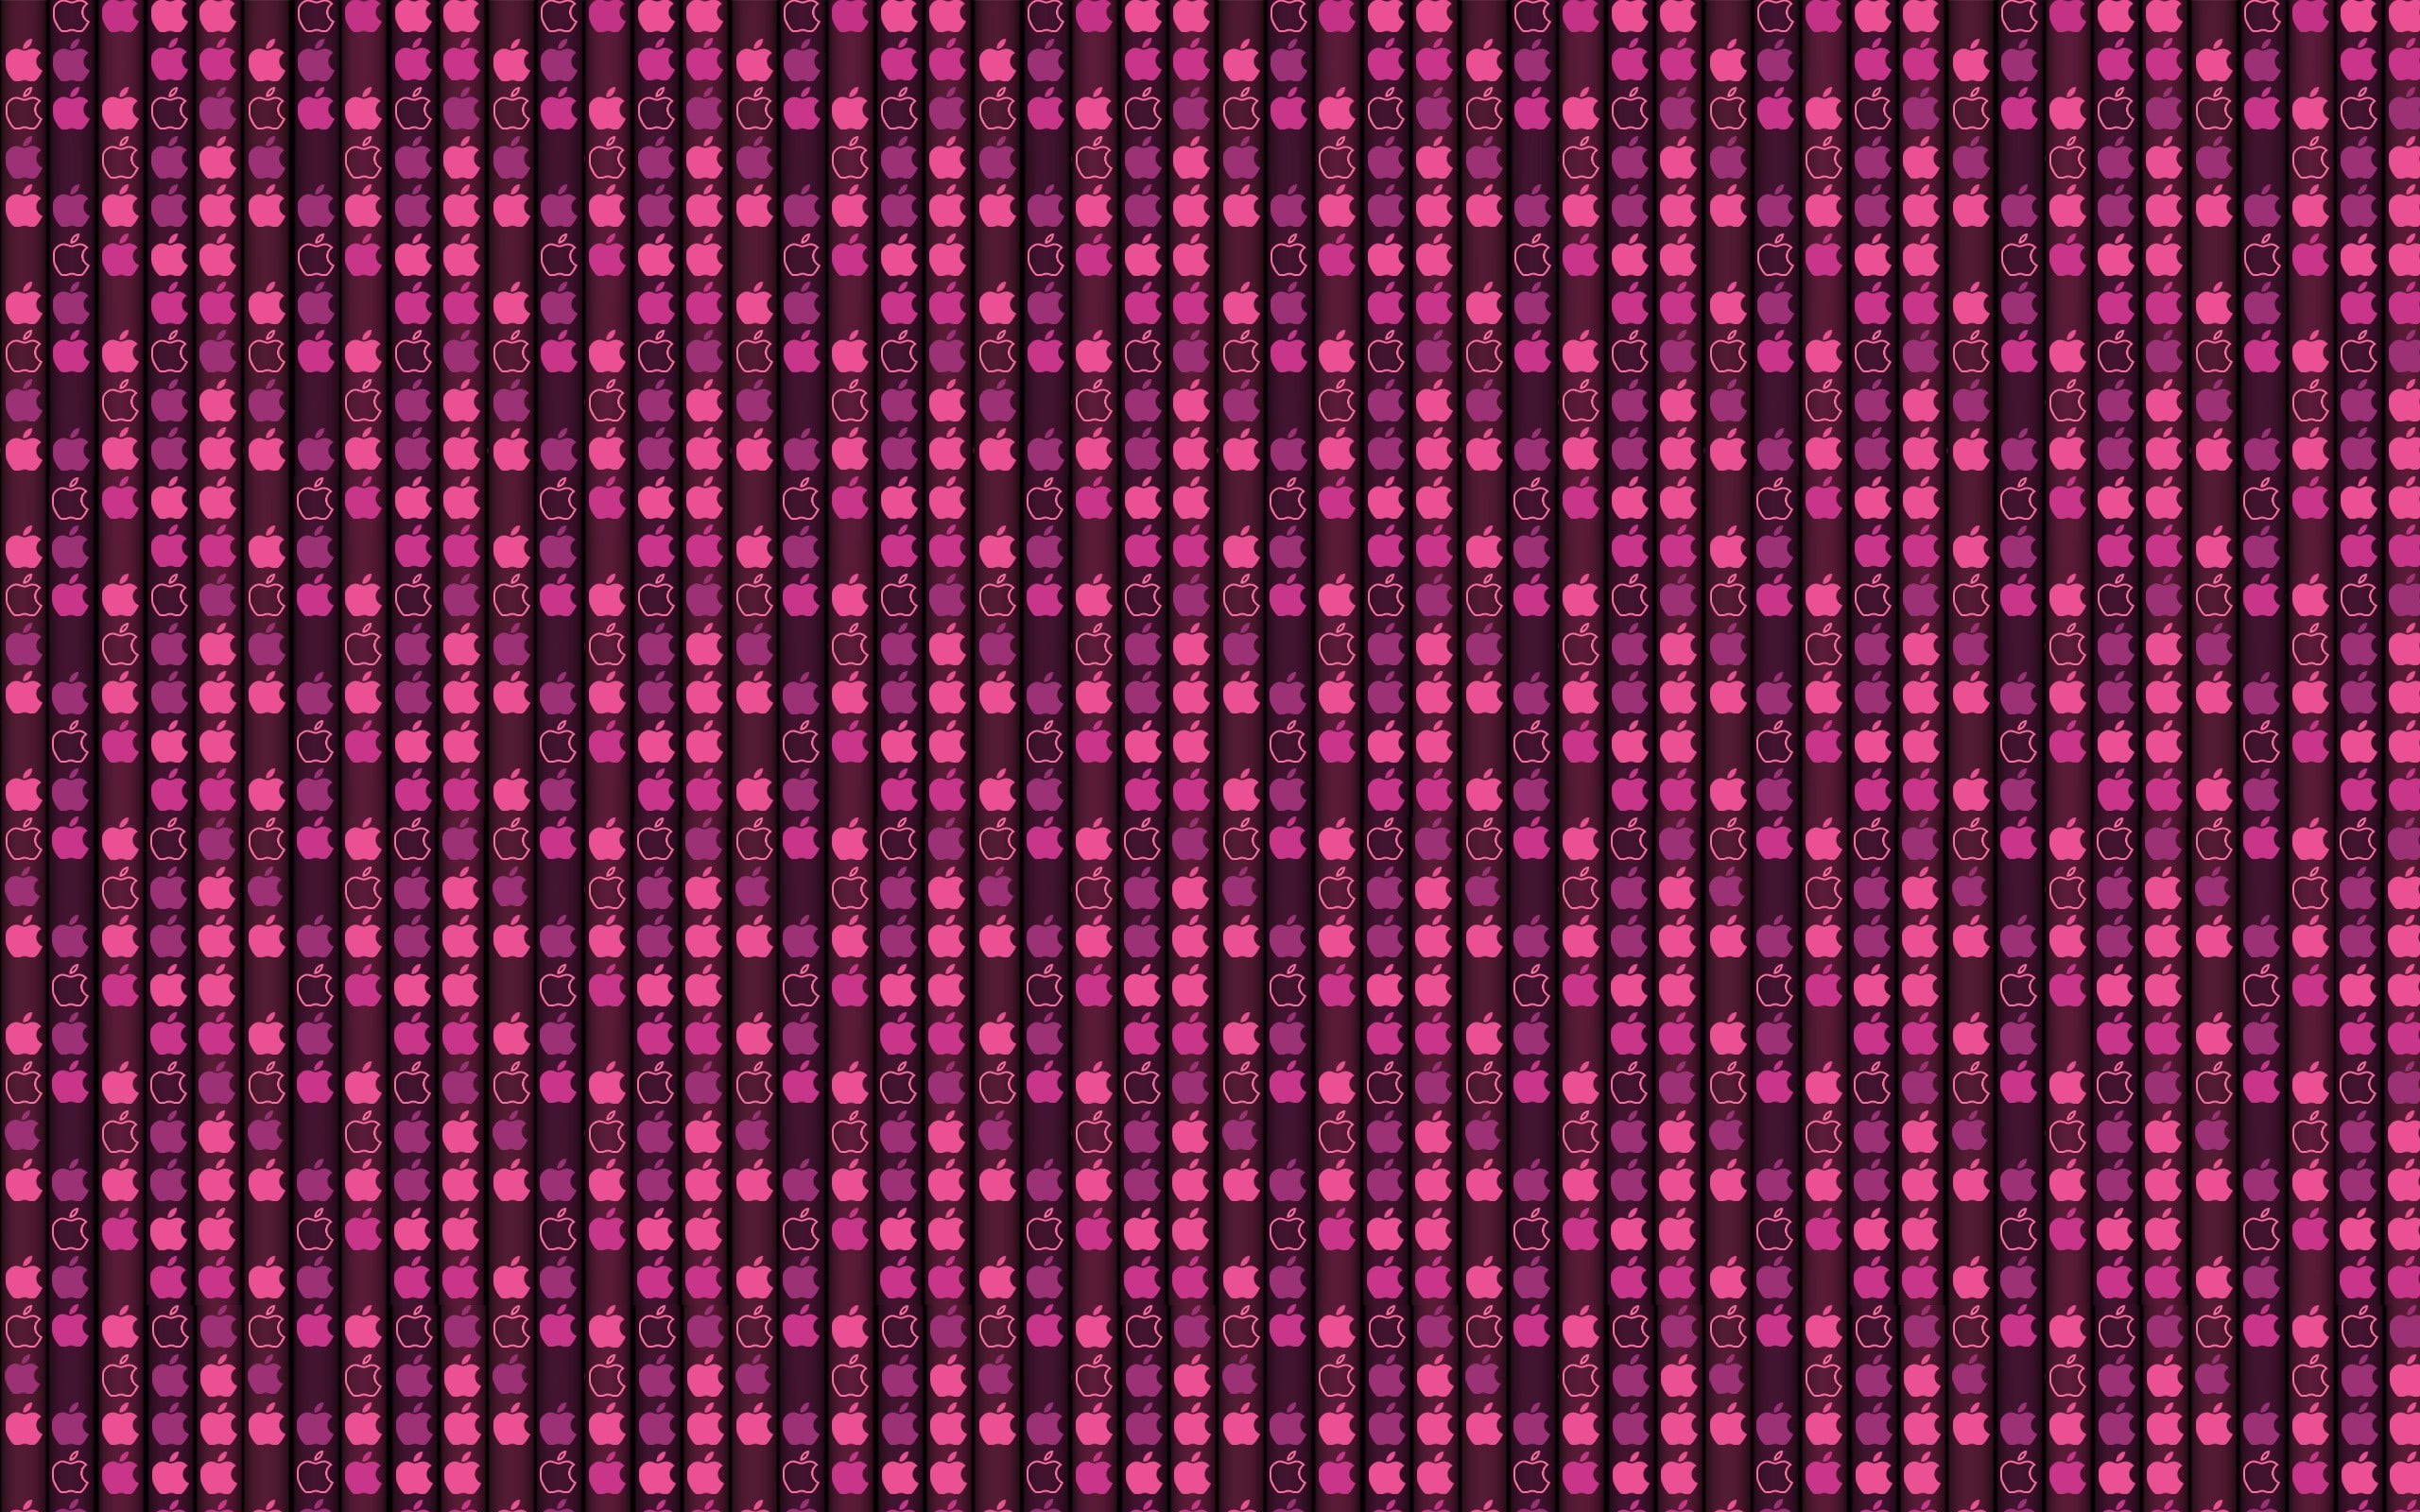 Apple Inc., pattern, digital art, pink color, backgrounds, purple